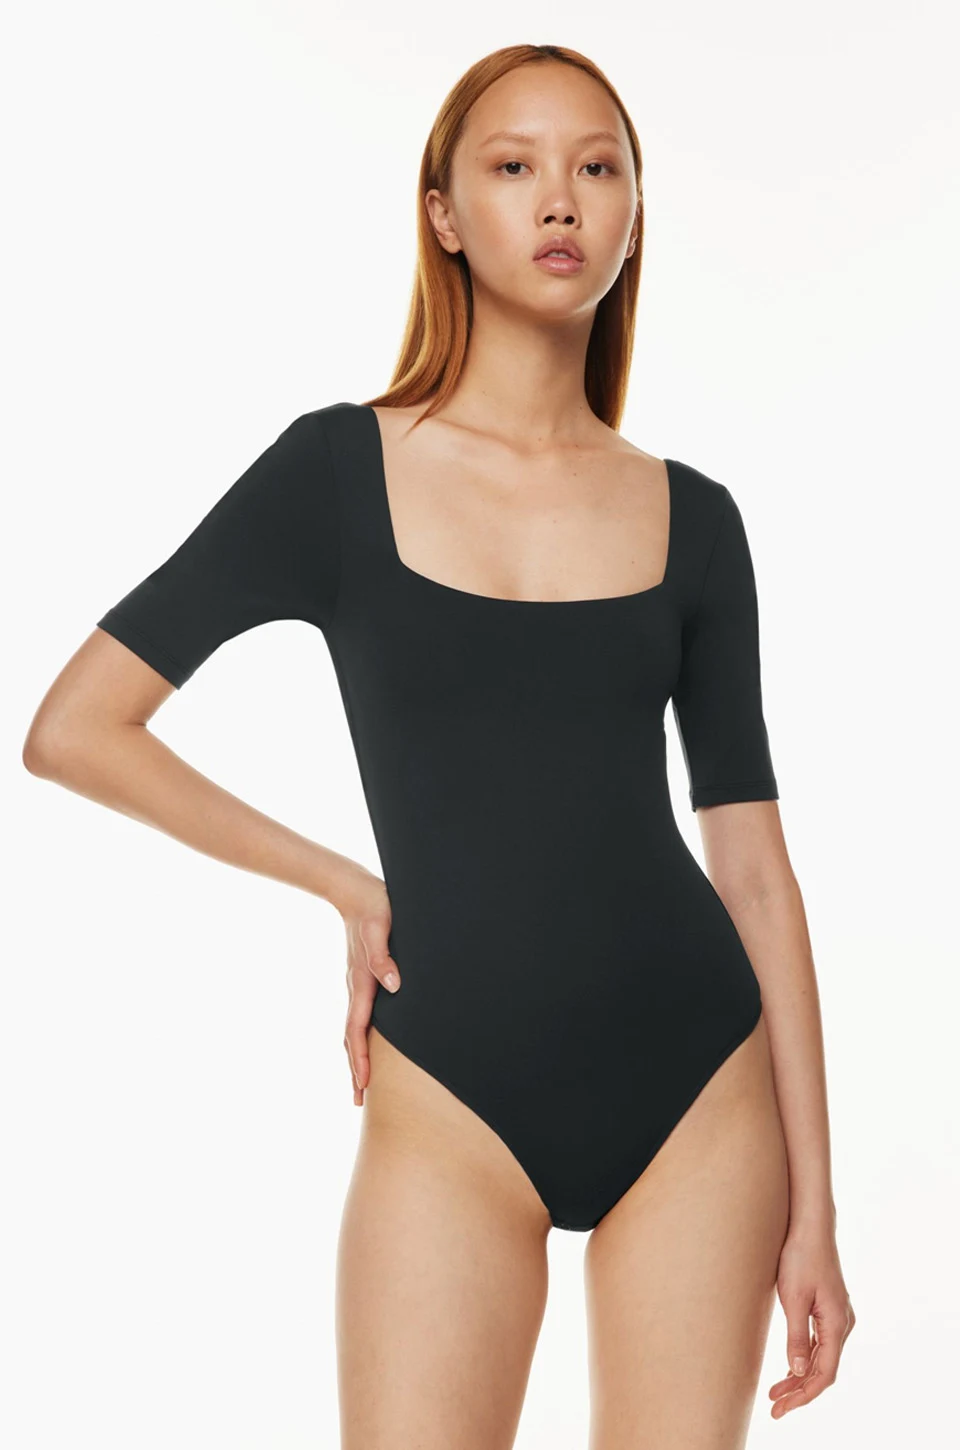 Where to Buy a Sexy Black Bodysuit - Schimiggy Reviews